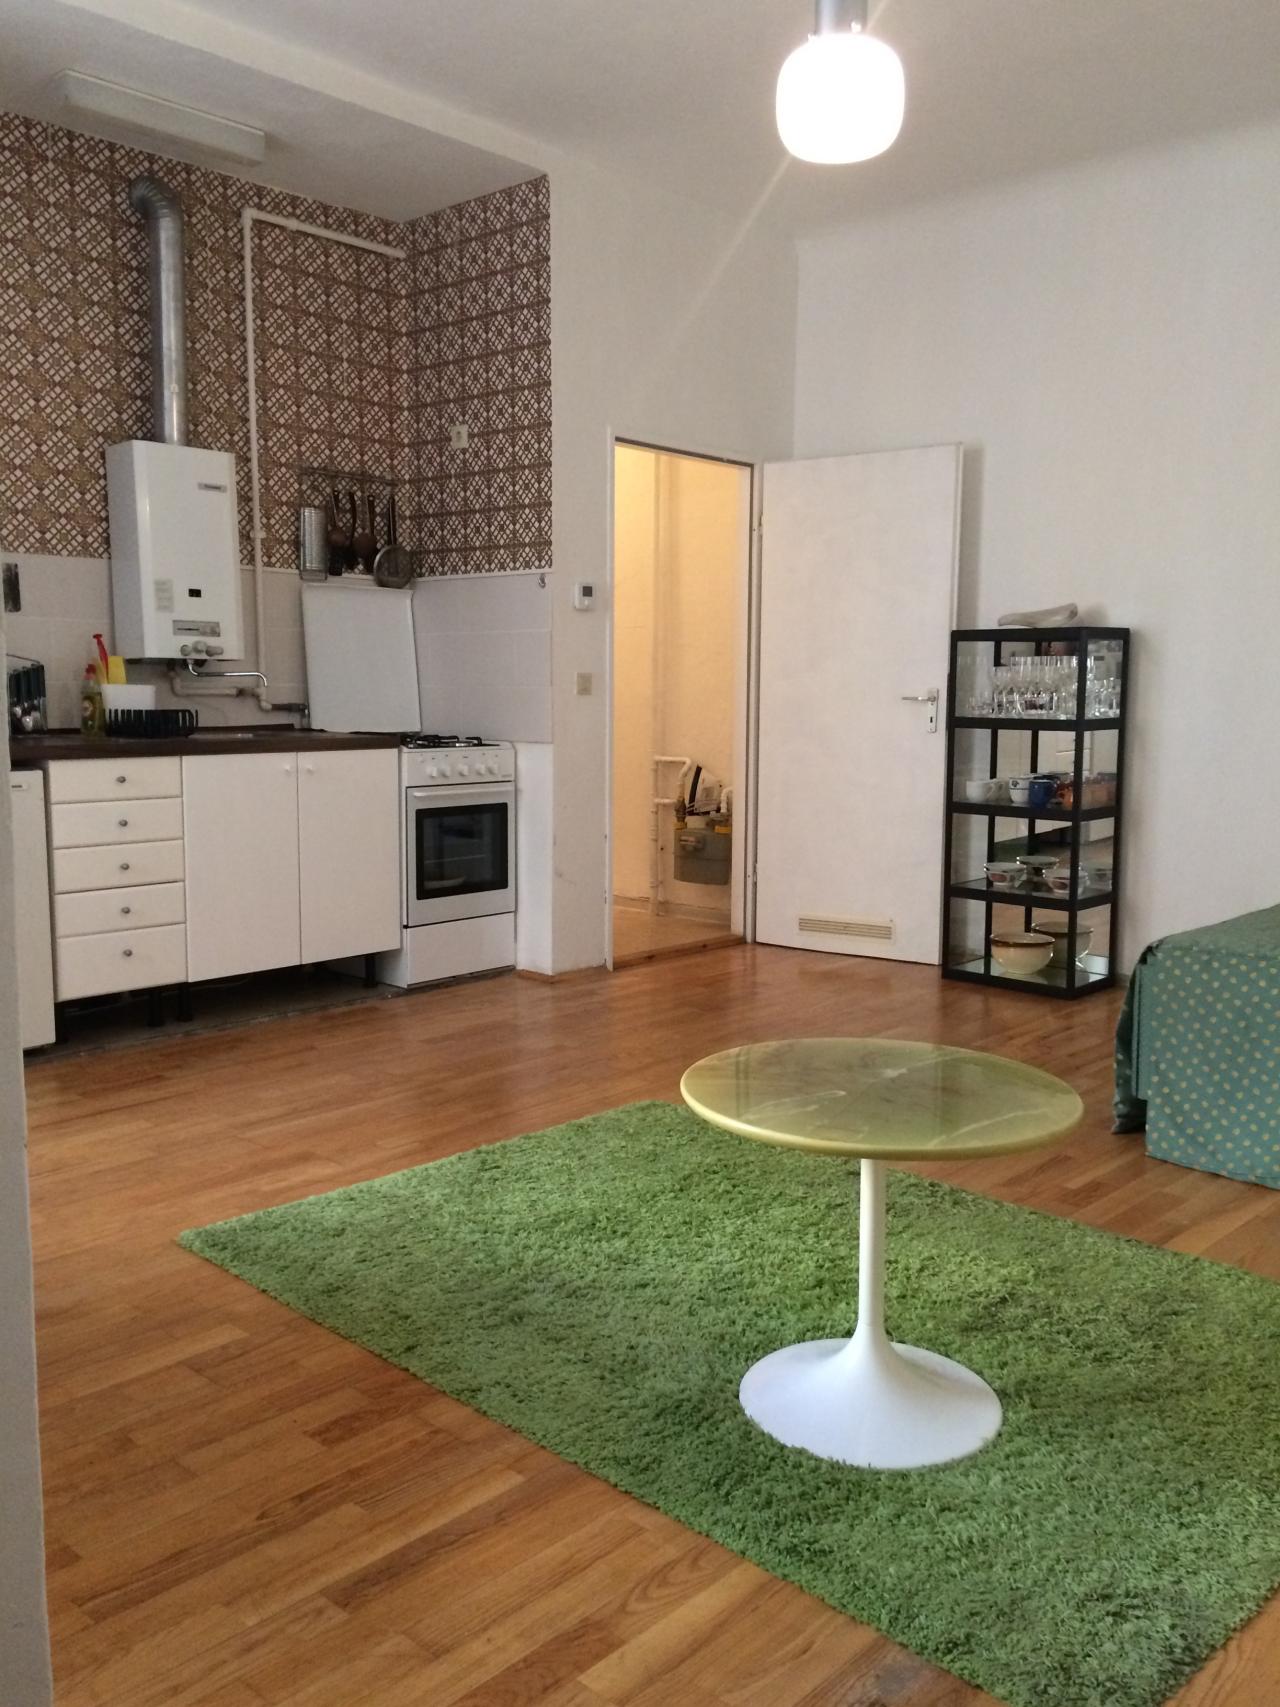 1,5 room flat in the heard of east Berlin (Prenzlauer Berg)